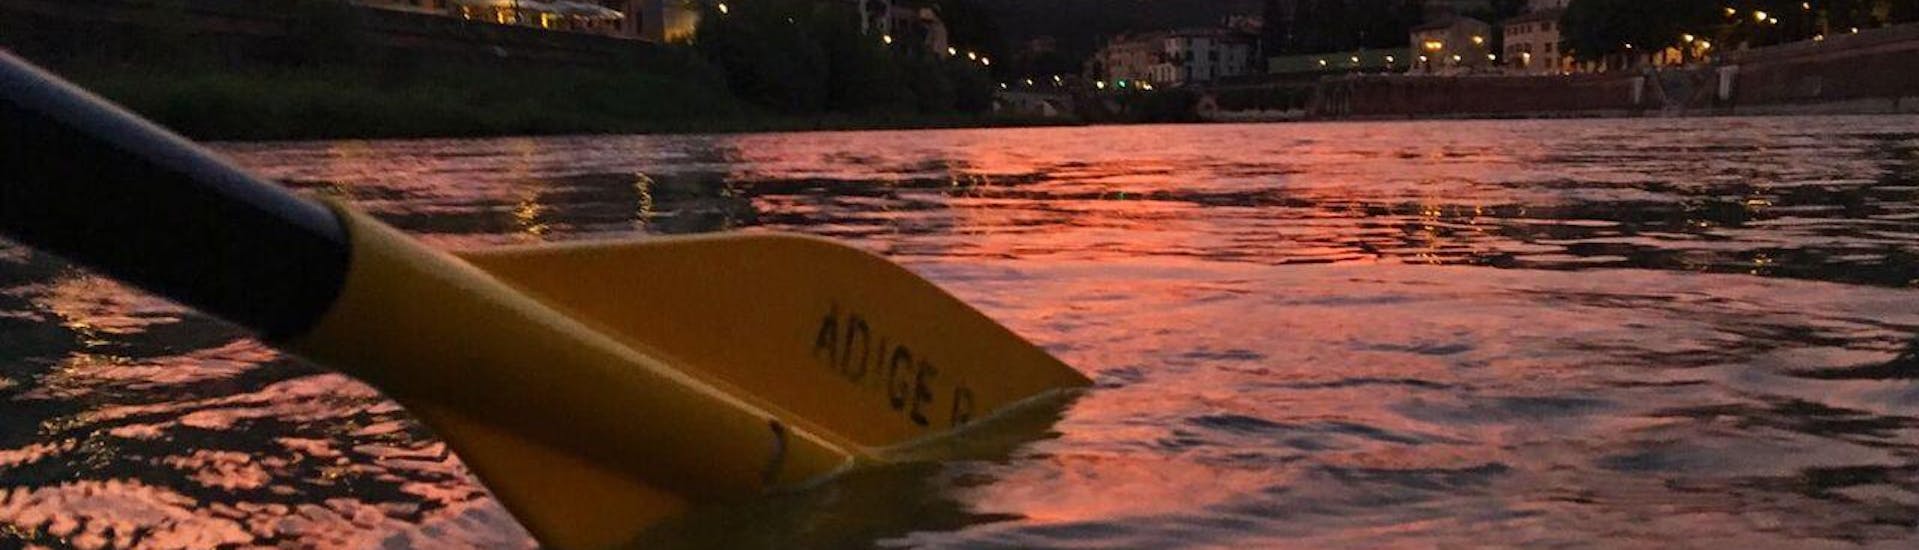 Rafting on the Adige with Aperitif.